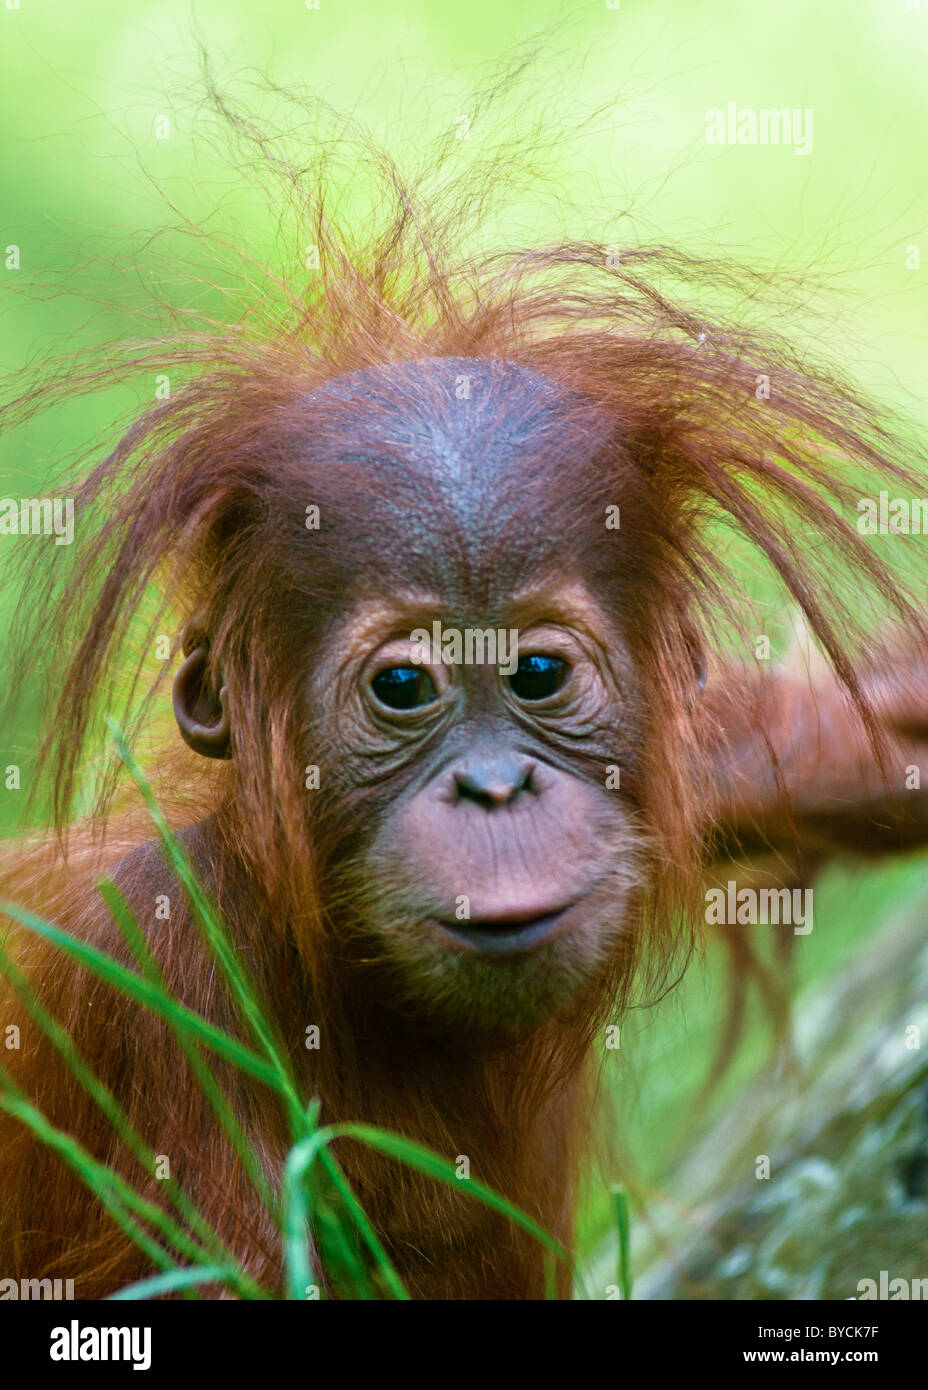 Cute baby Orangutan (Pongo pygmaeus) up close with eye contact. Stock Photo